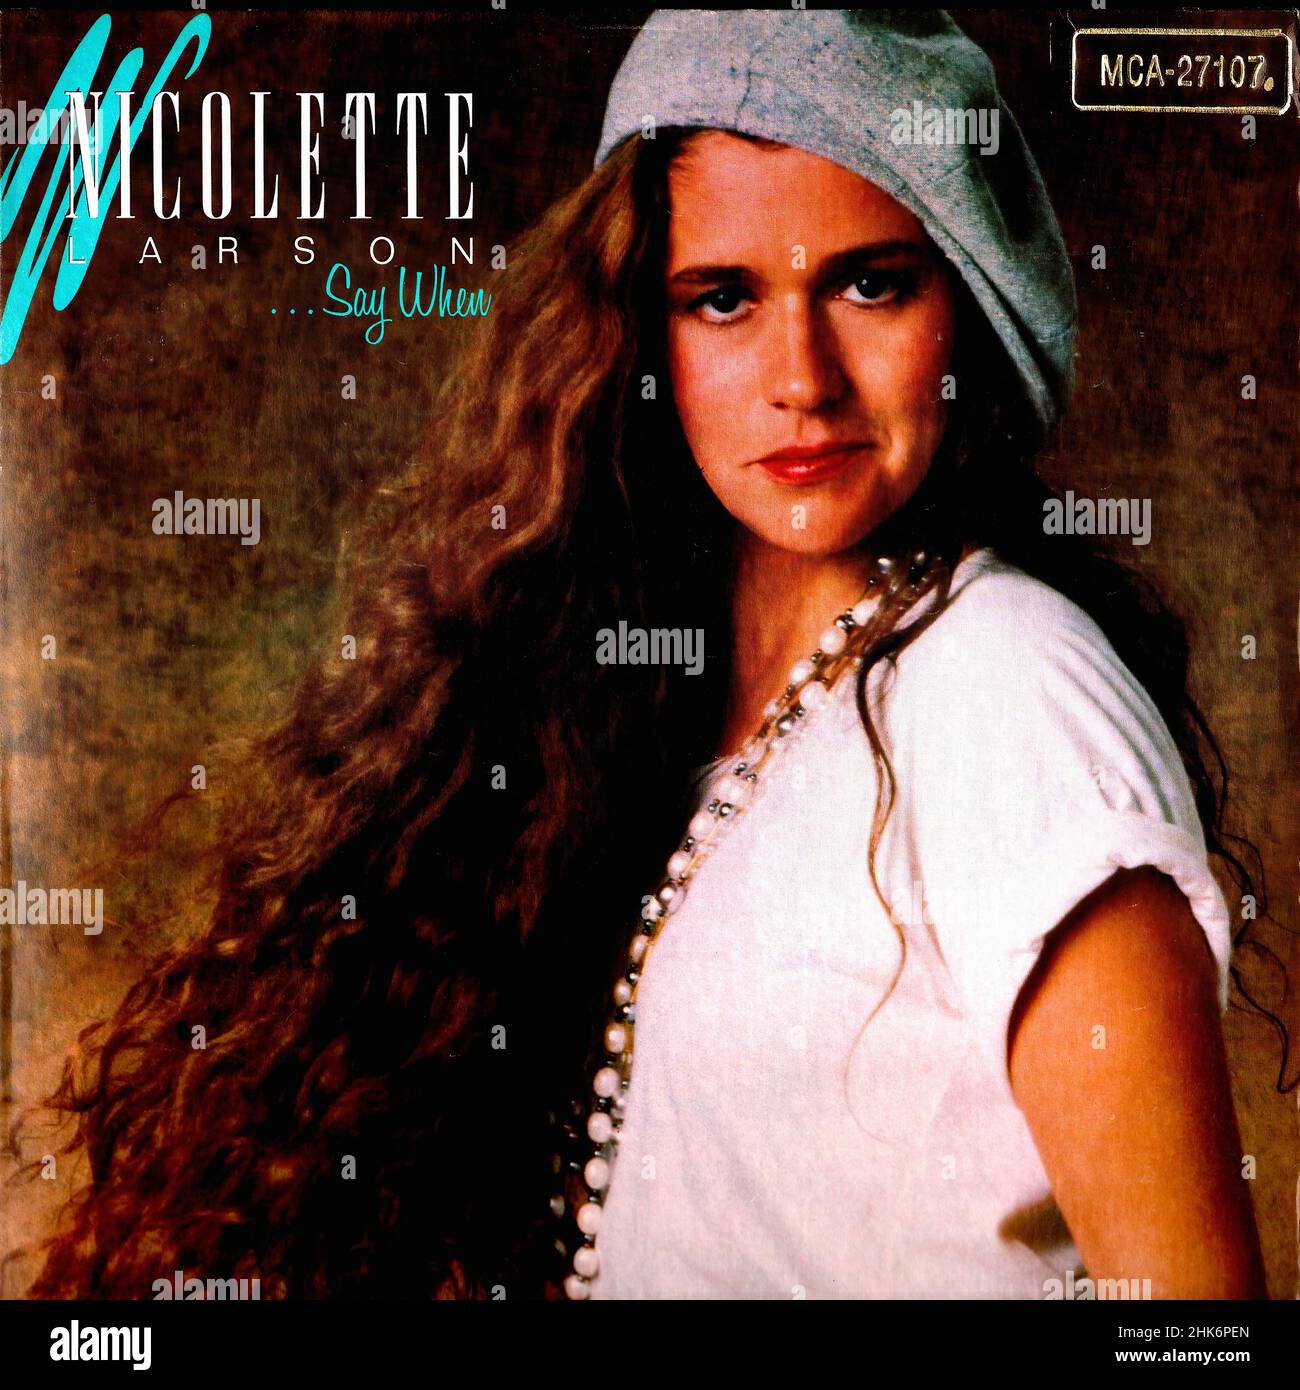 Vintage vinyl record cover - Larson, Nicolette - Say When - US - 1985 Stock Photo